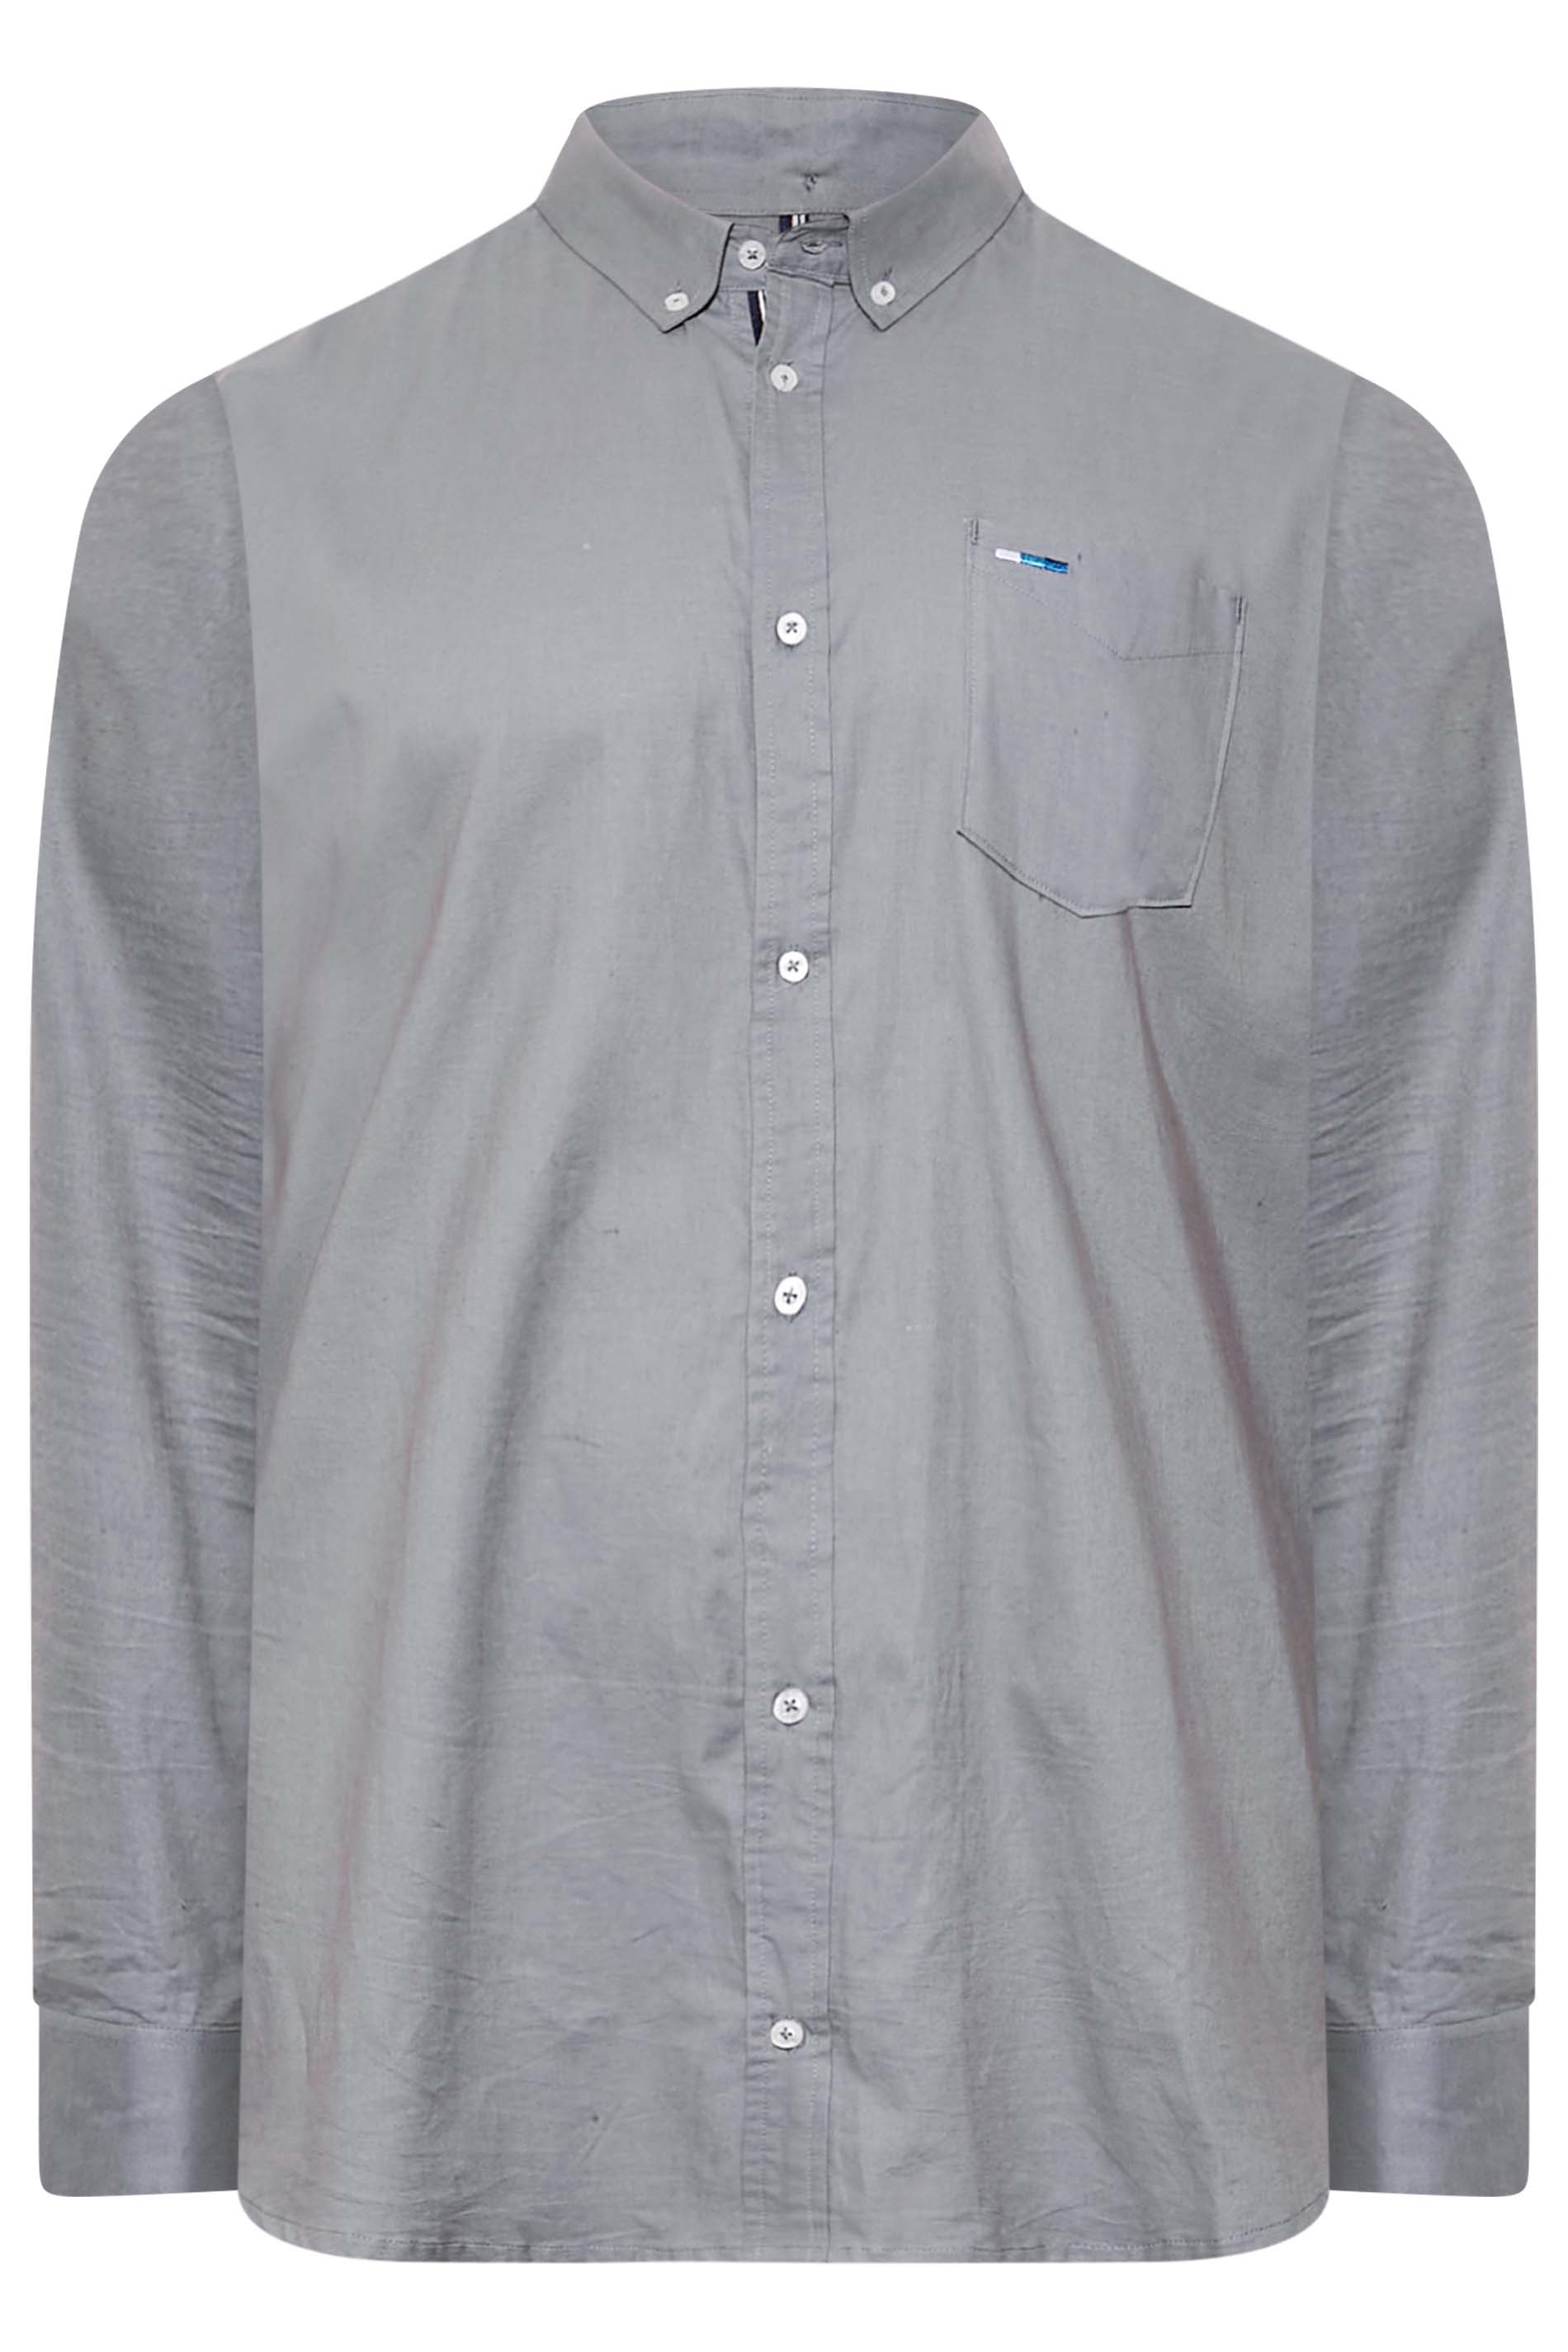 BadRhino Big & Tall Grey Long Sleeve Oxford Shirt | BadRhino 3